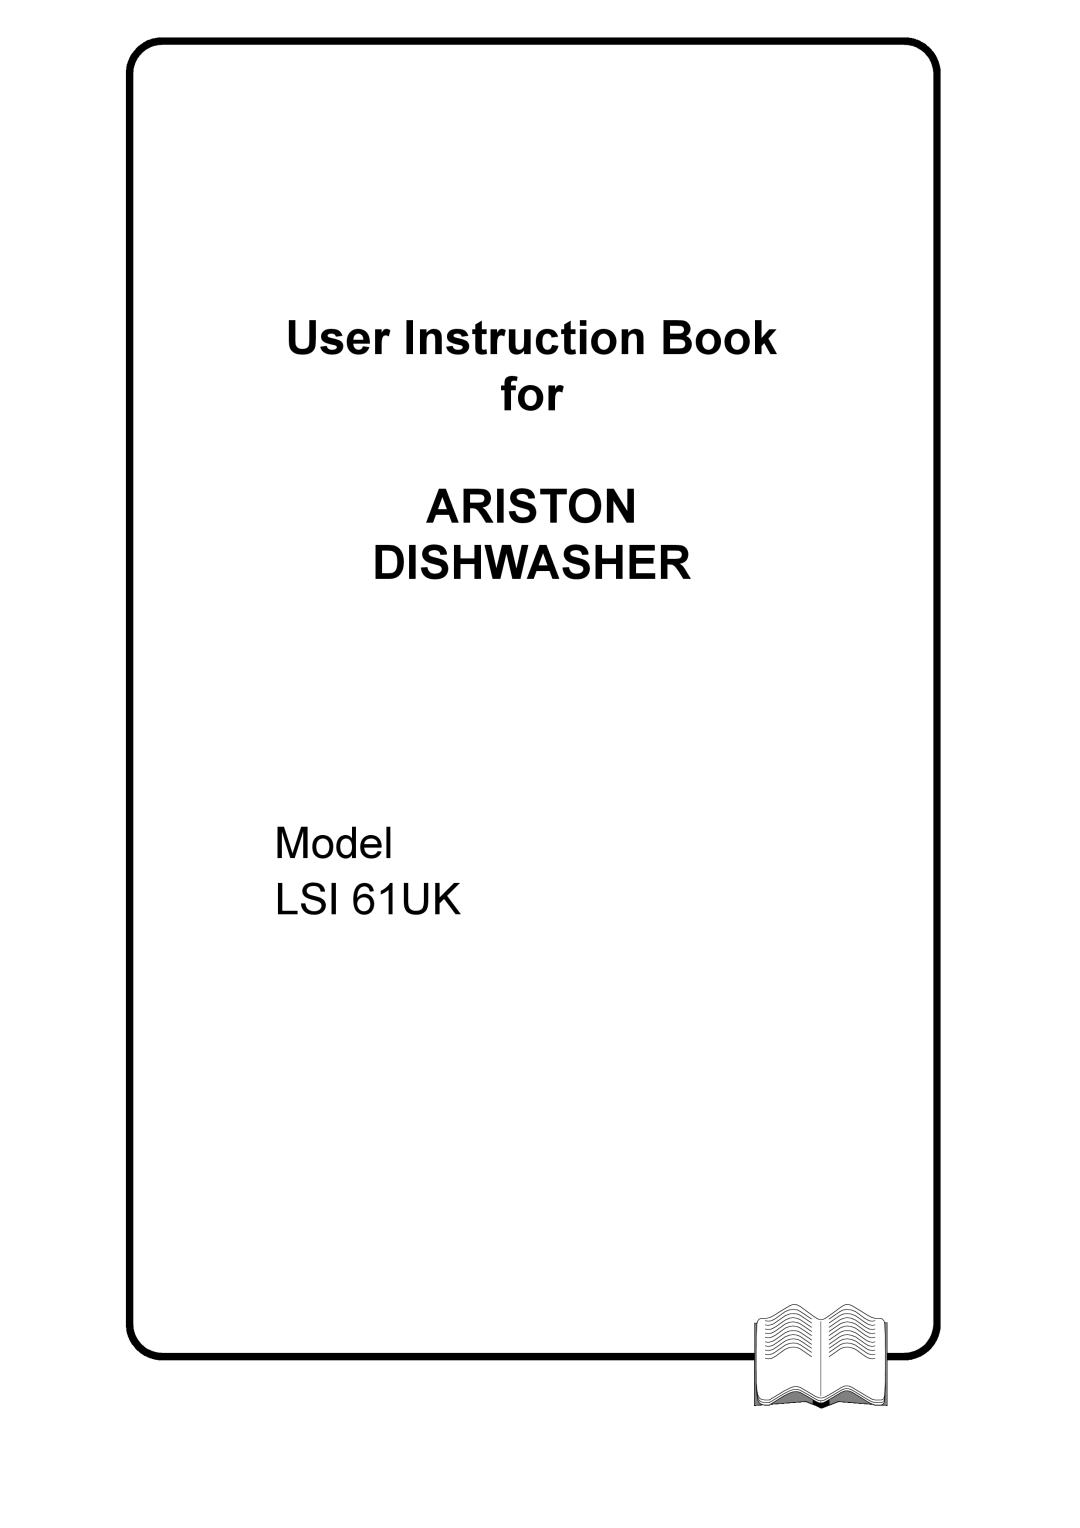 Ariston manual User Instruction Book for ARISTON DISHWASHER, Model LSI 61UK 